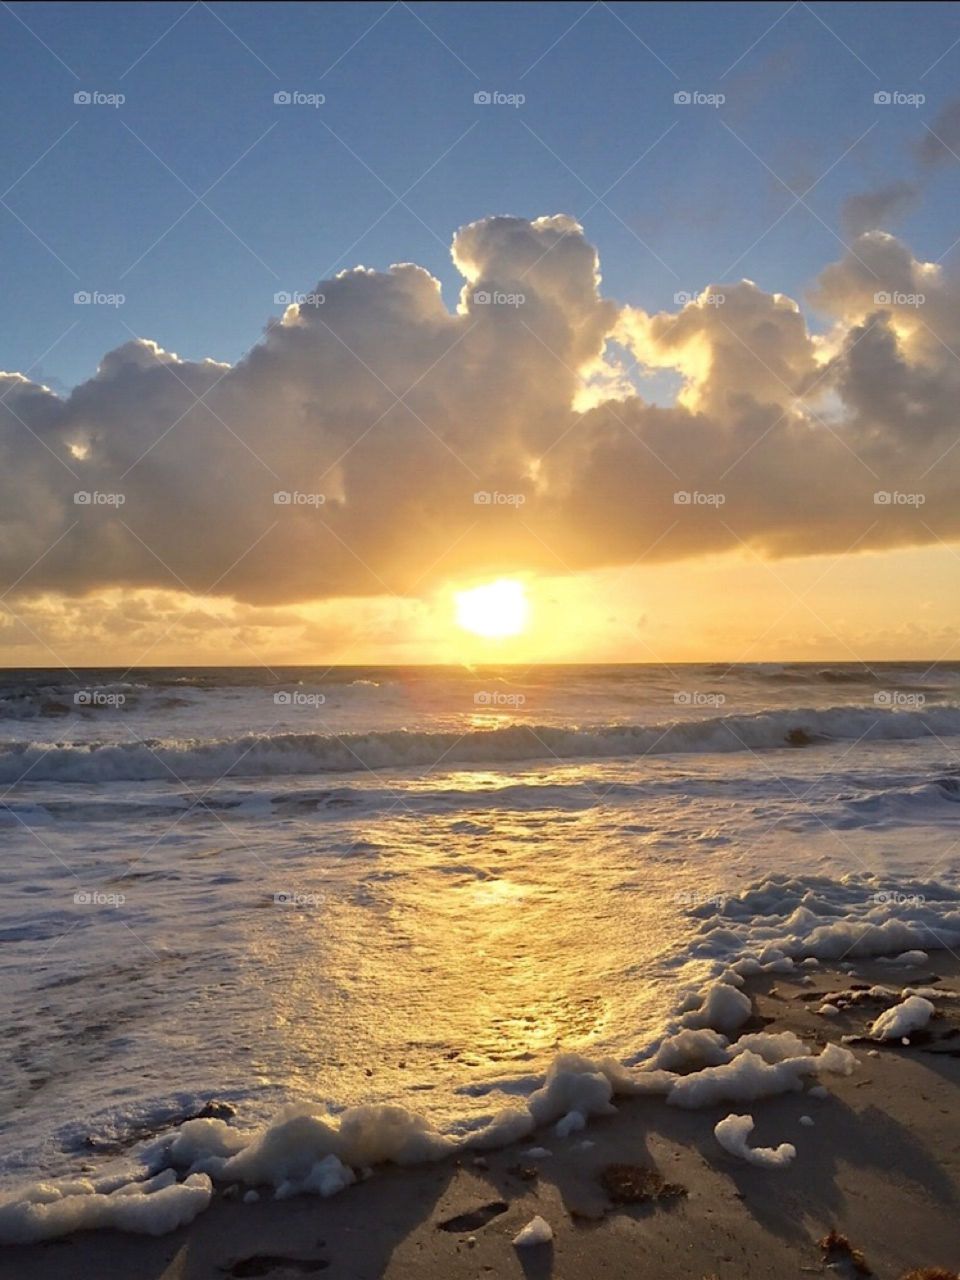 Sea foam and a golden sunrise. 